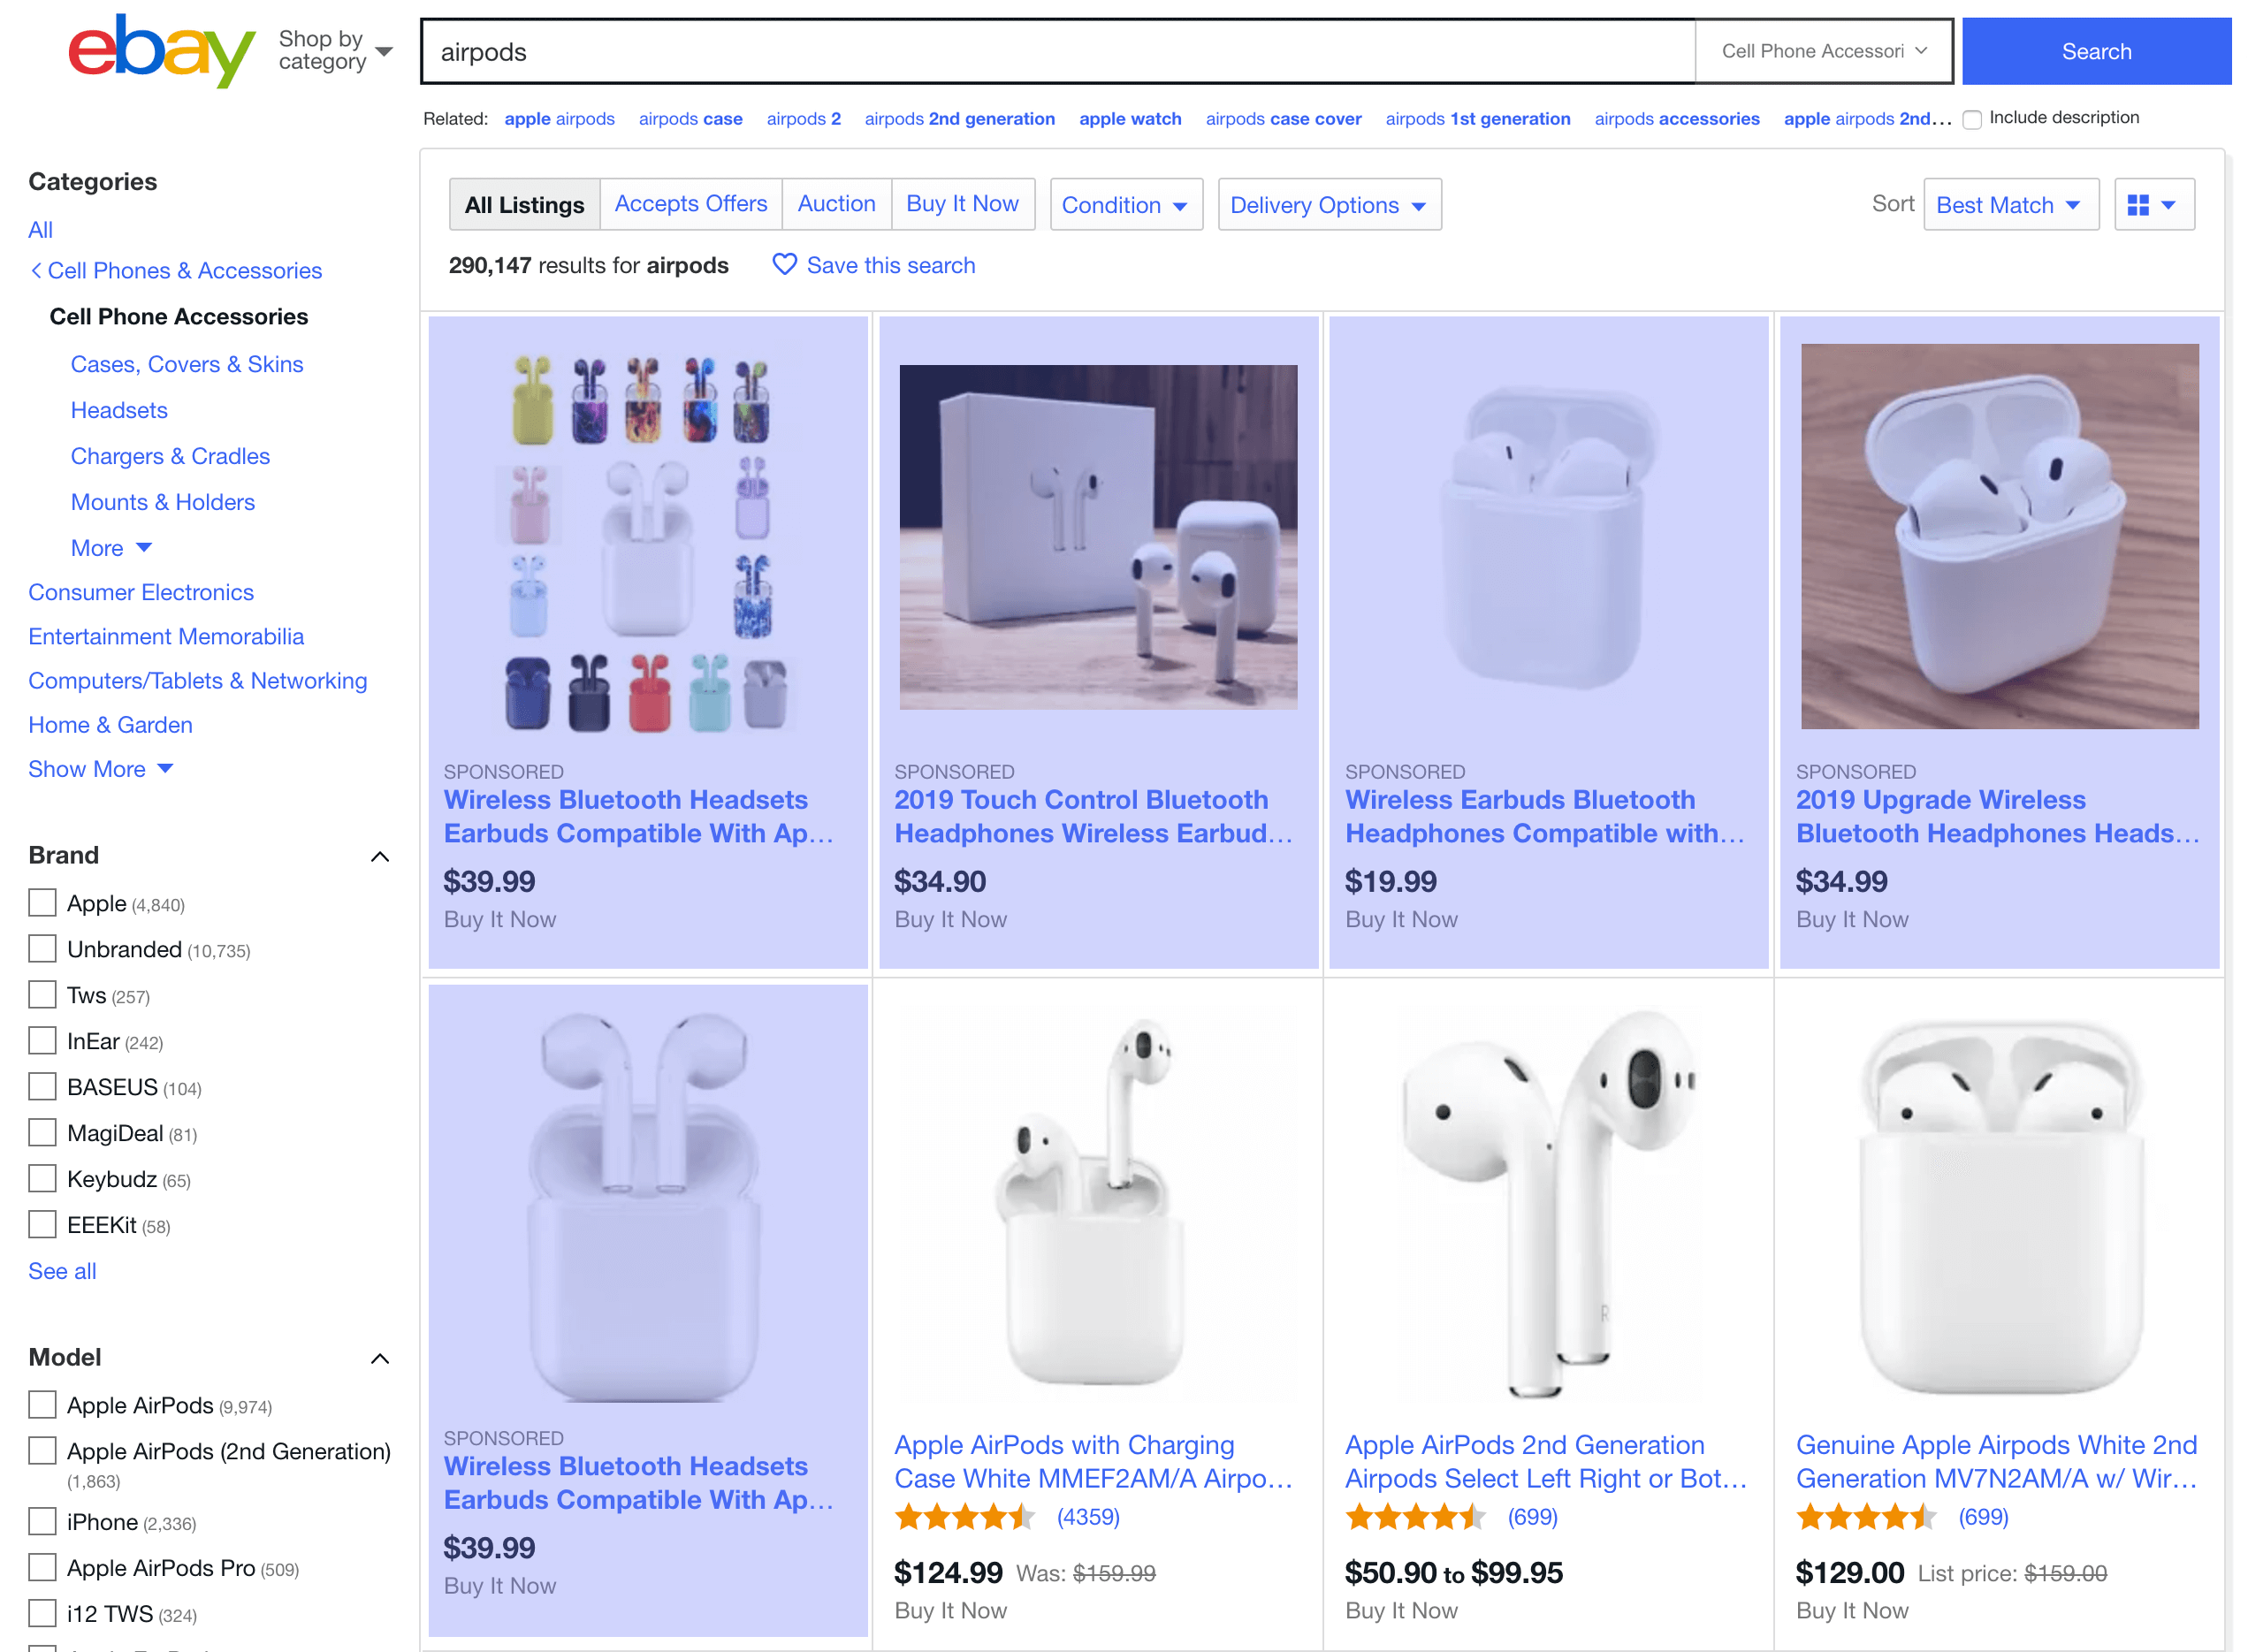 eBay Sponsored products